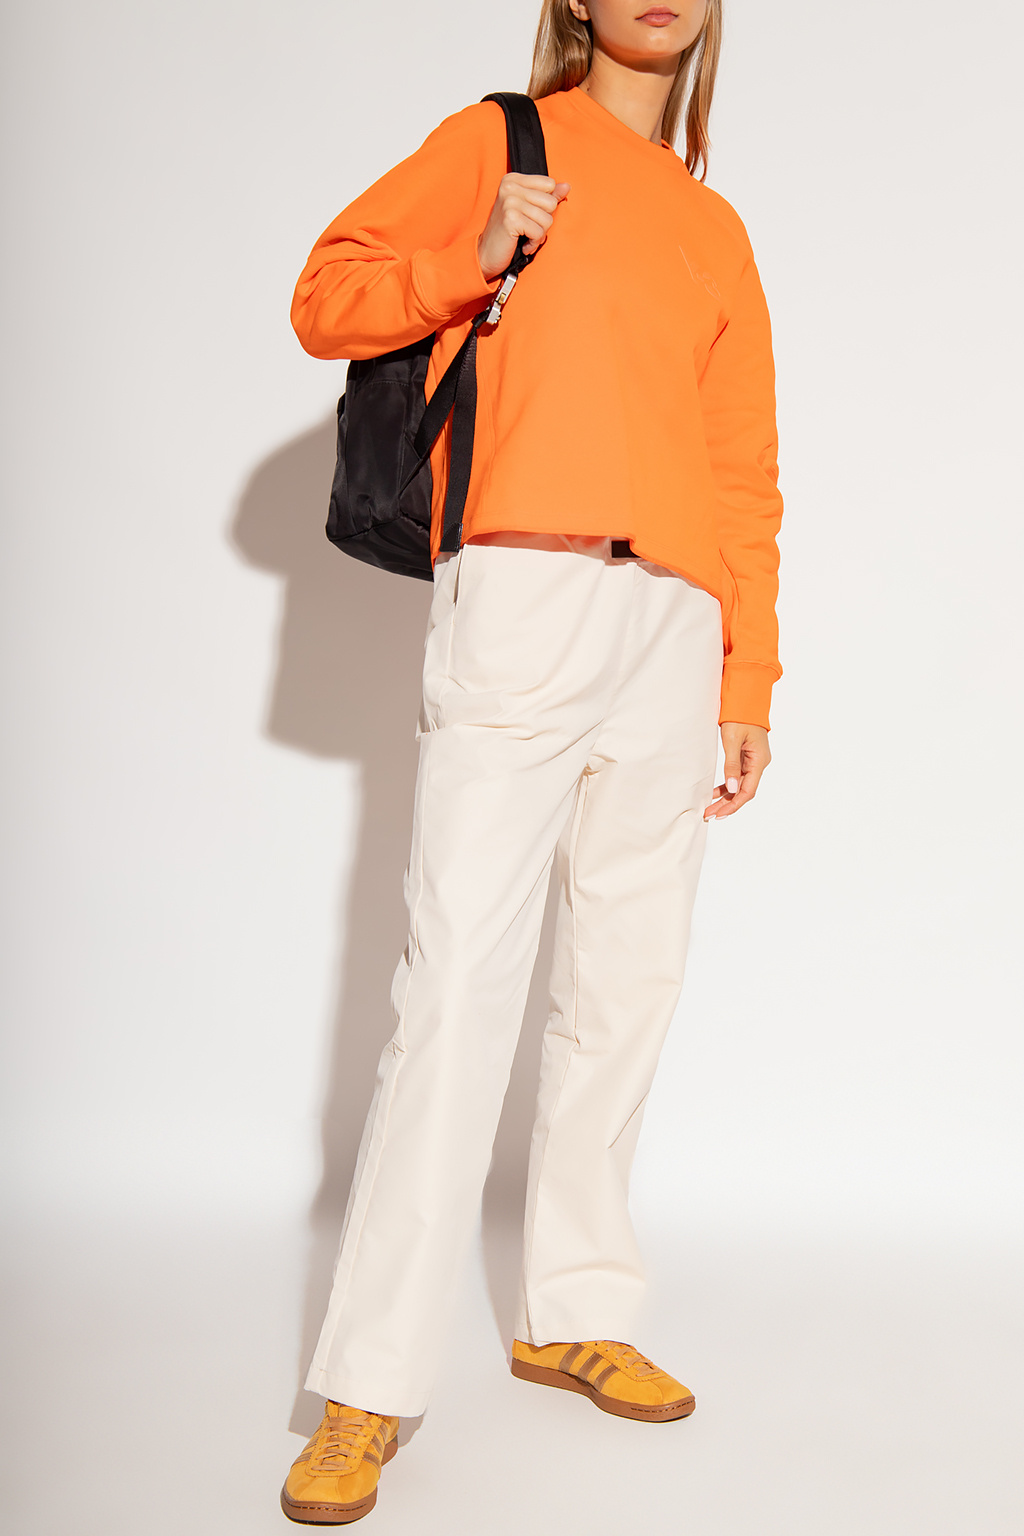 Shirt Y - 3 Yohji Yamamoto - Orange Strappy Knitted T ...